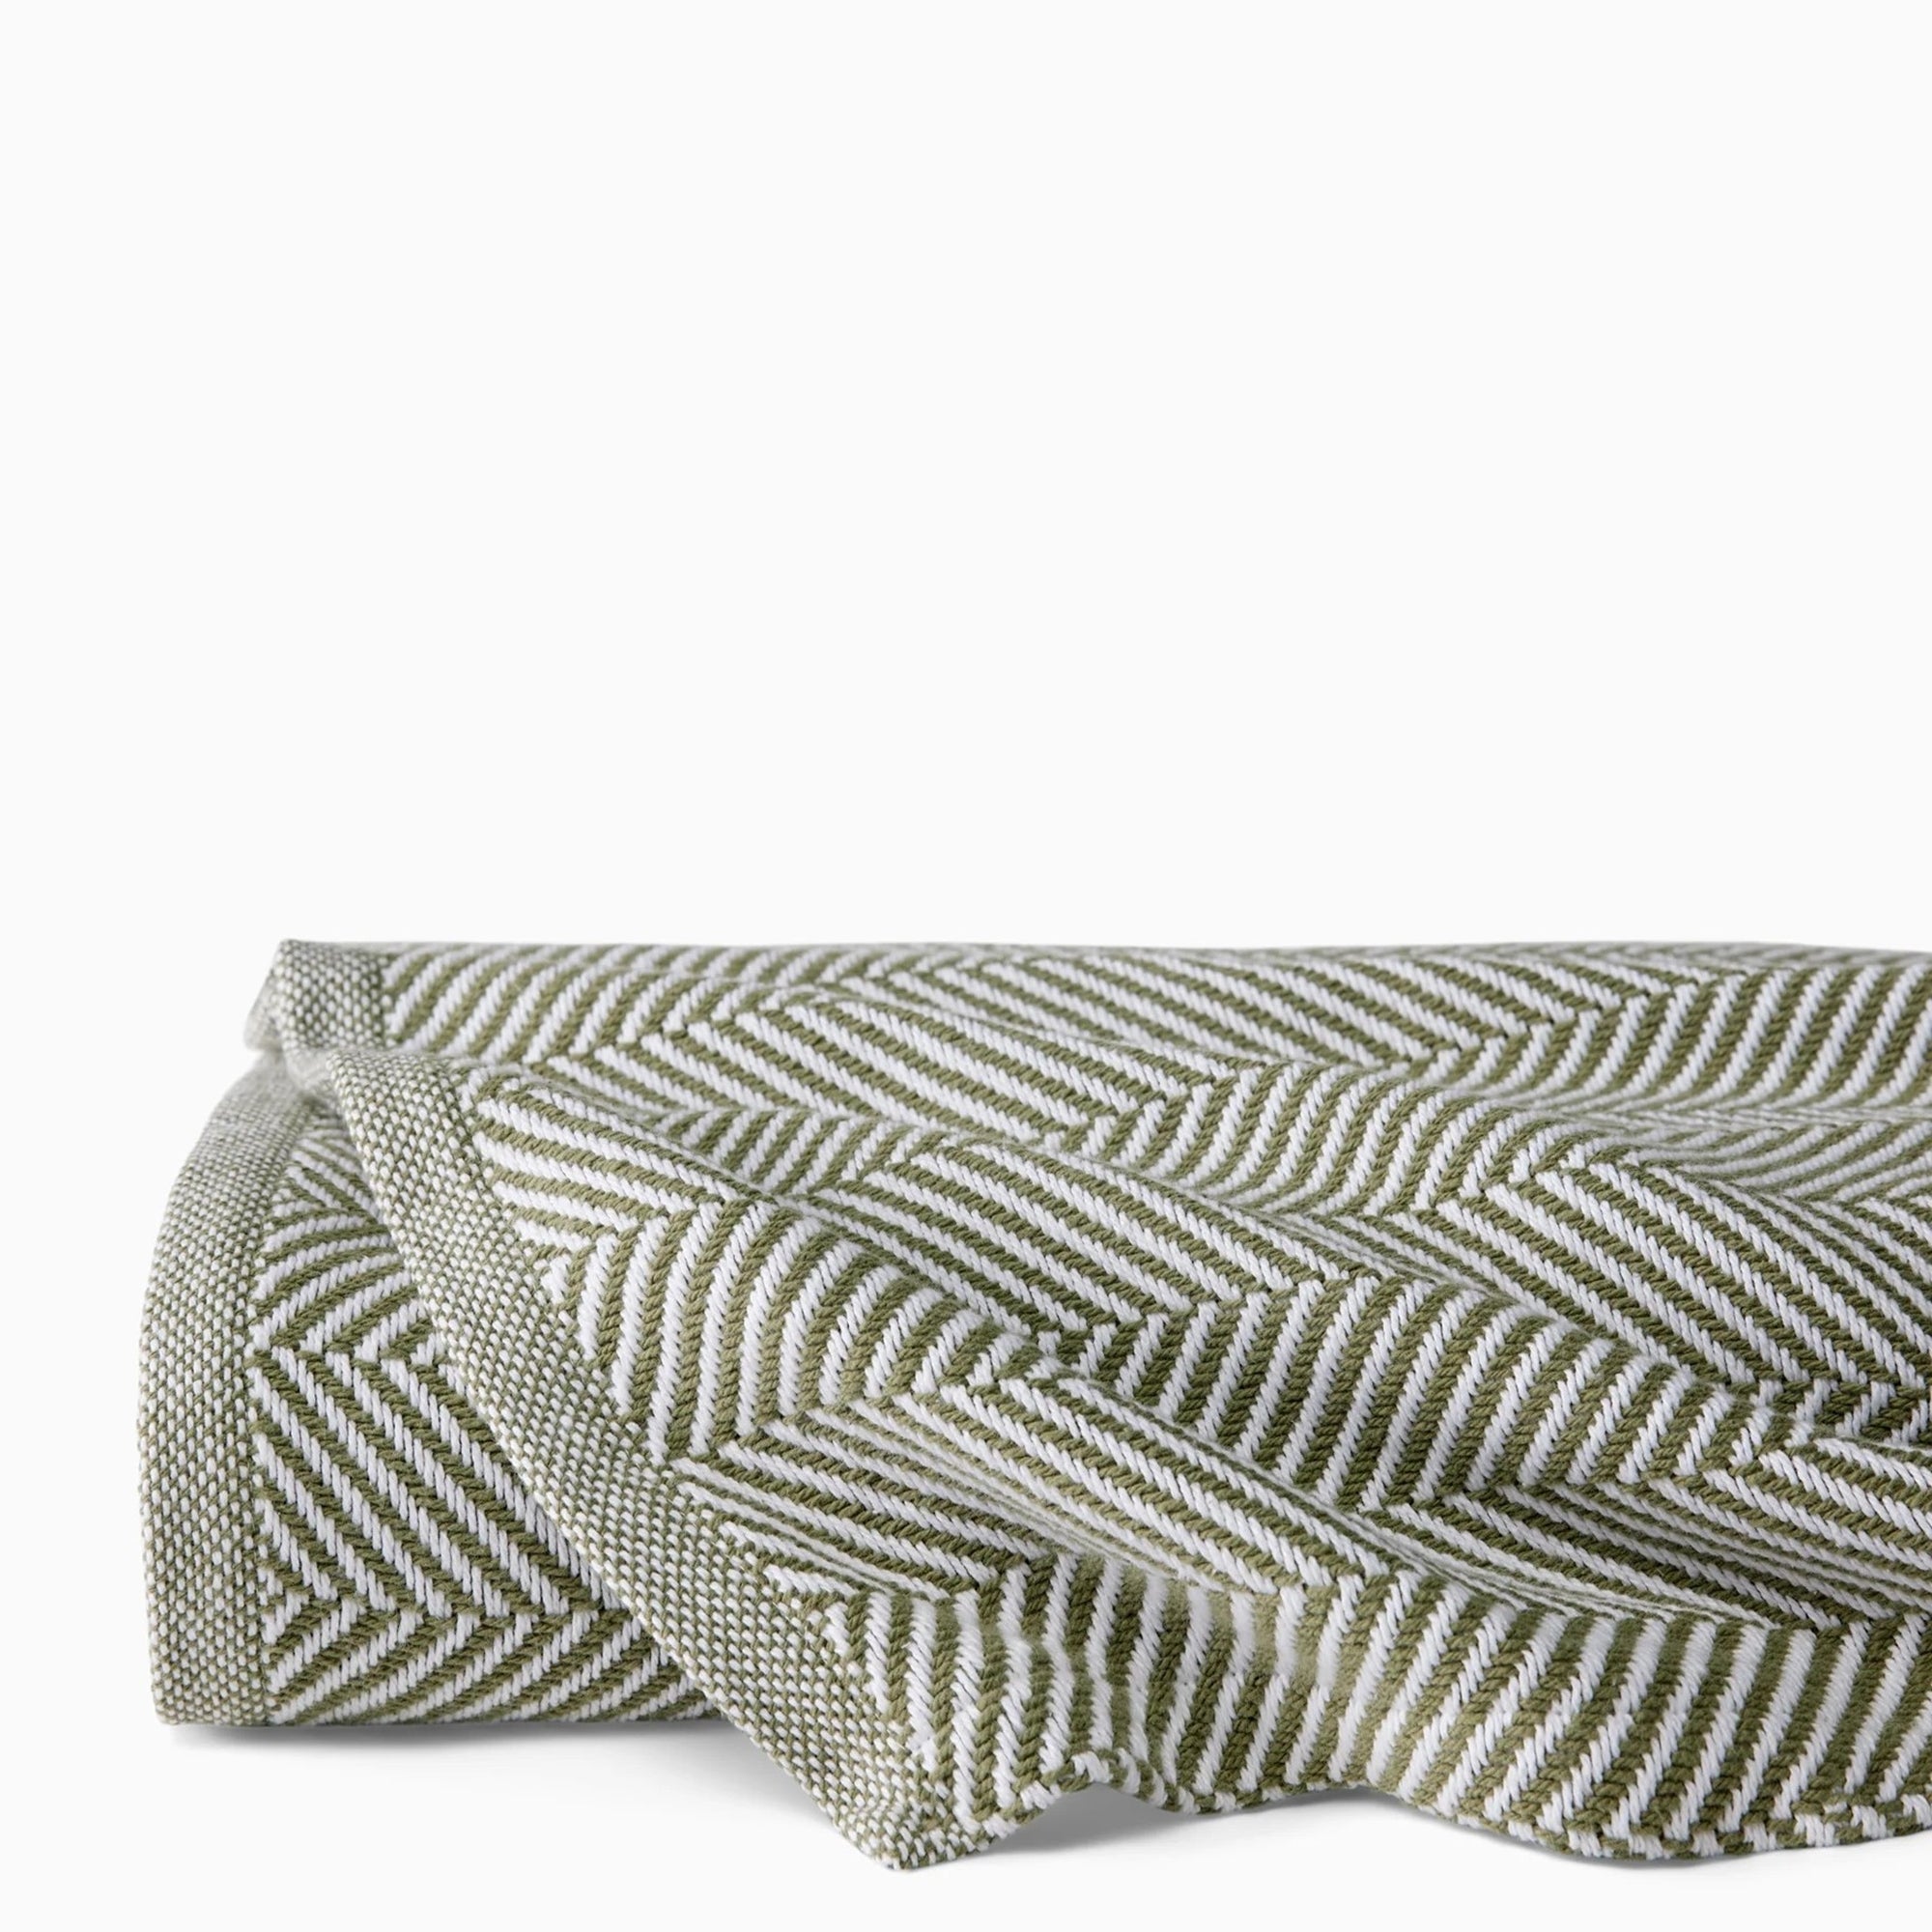 Folded Sferra Camilo Blanket in White/Willow